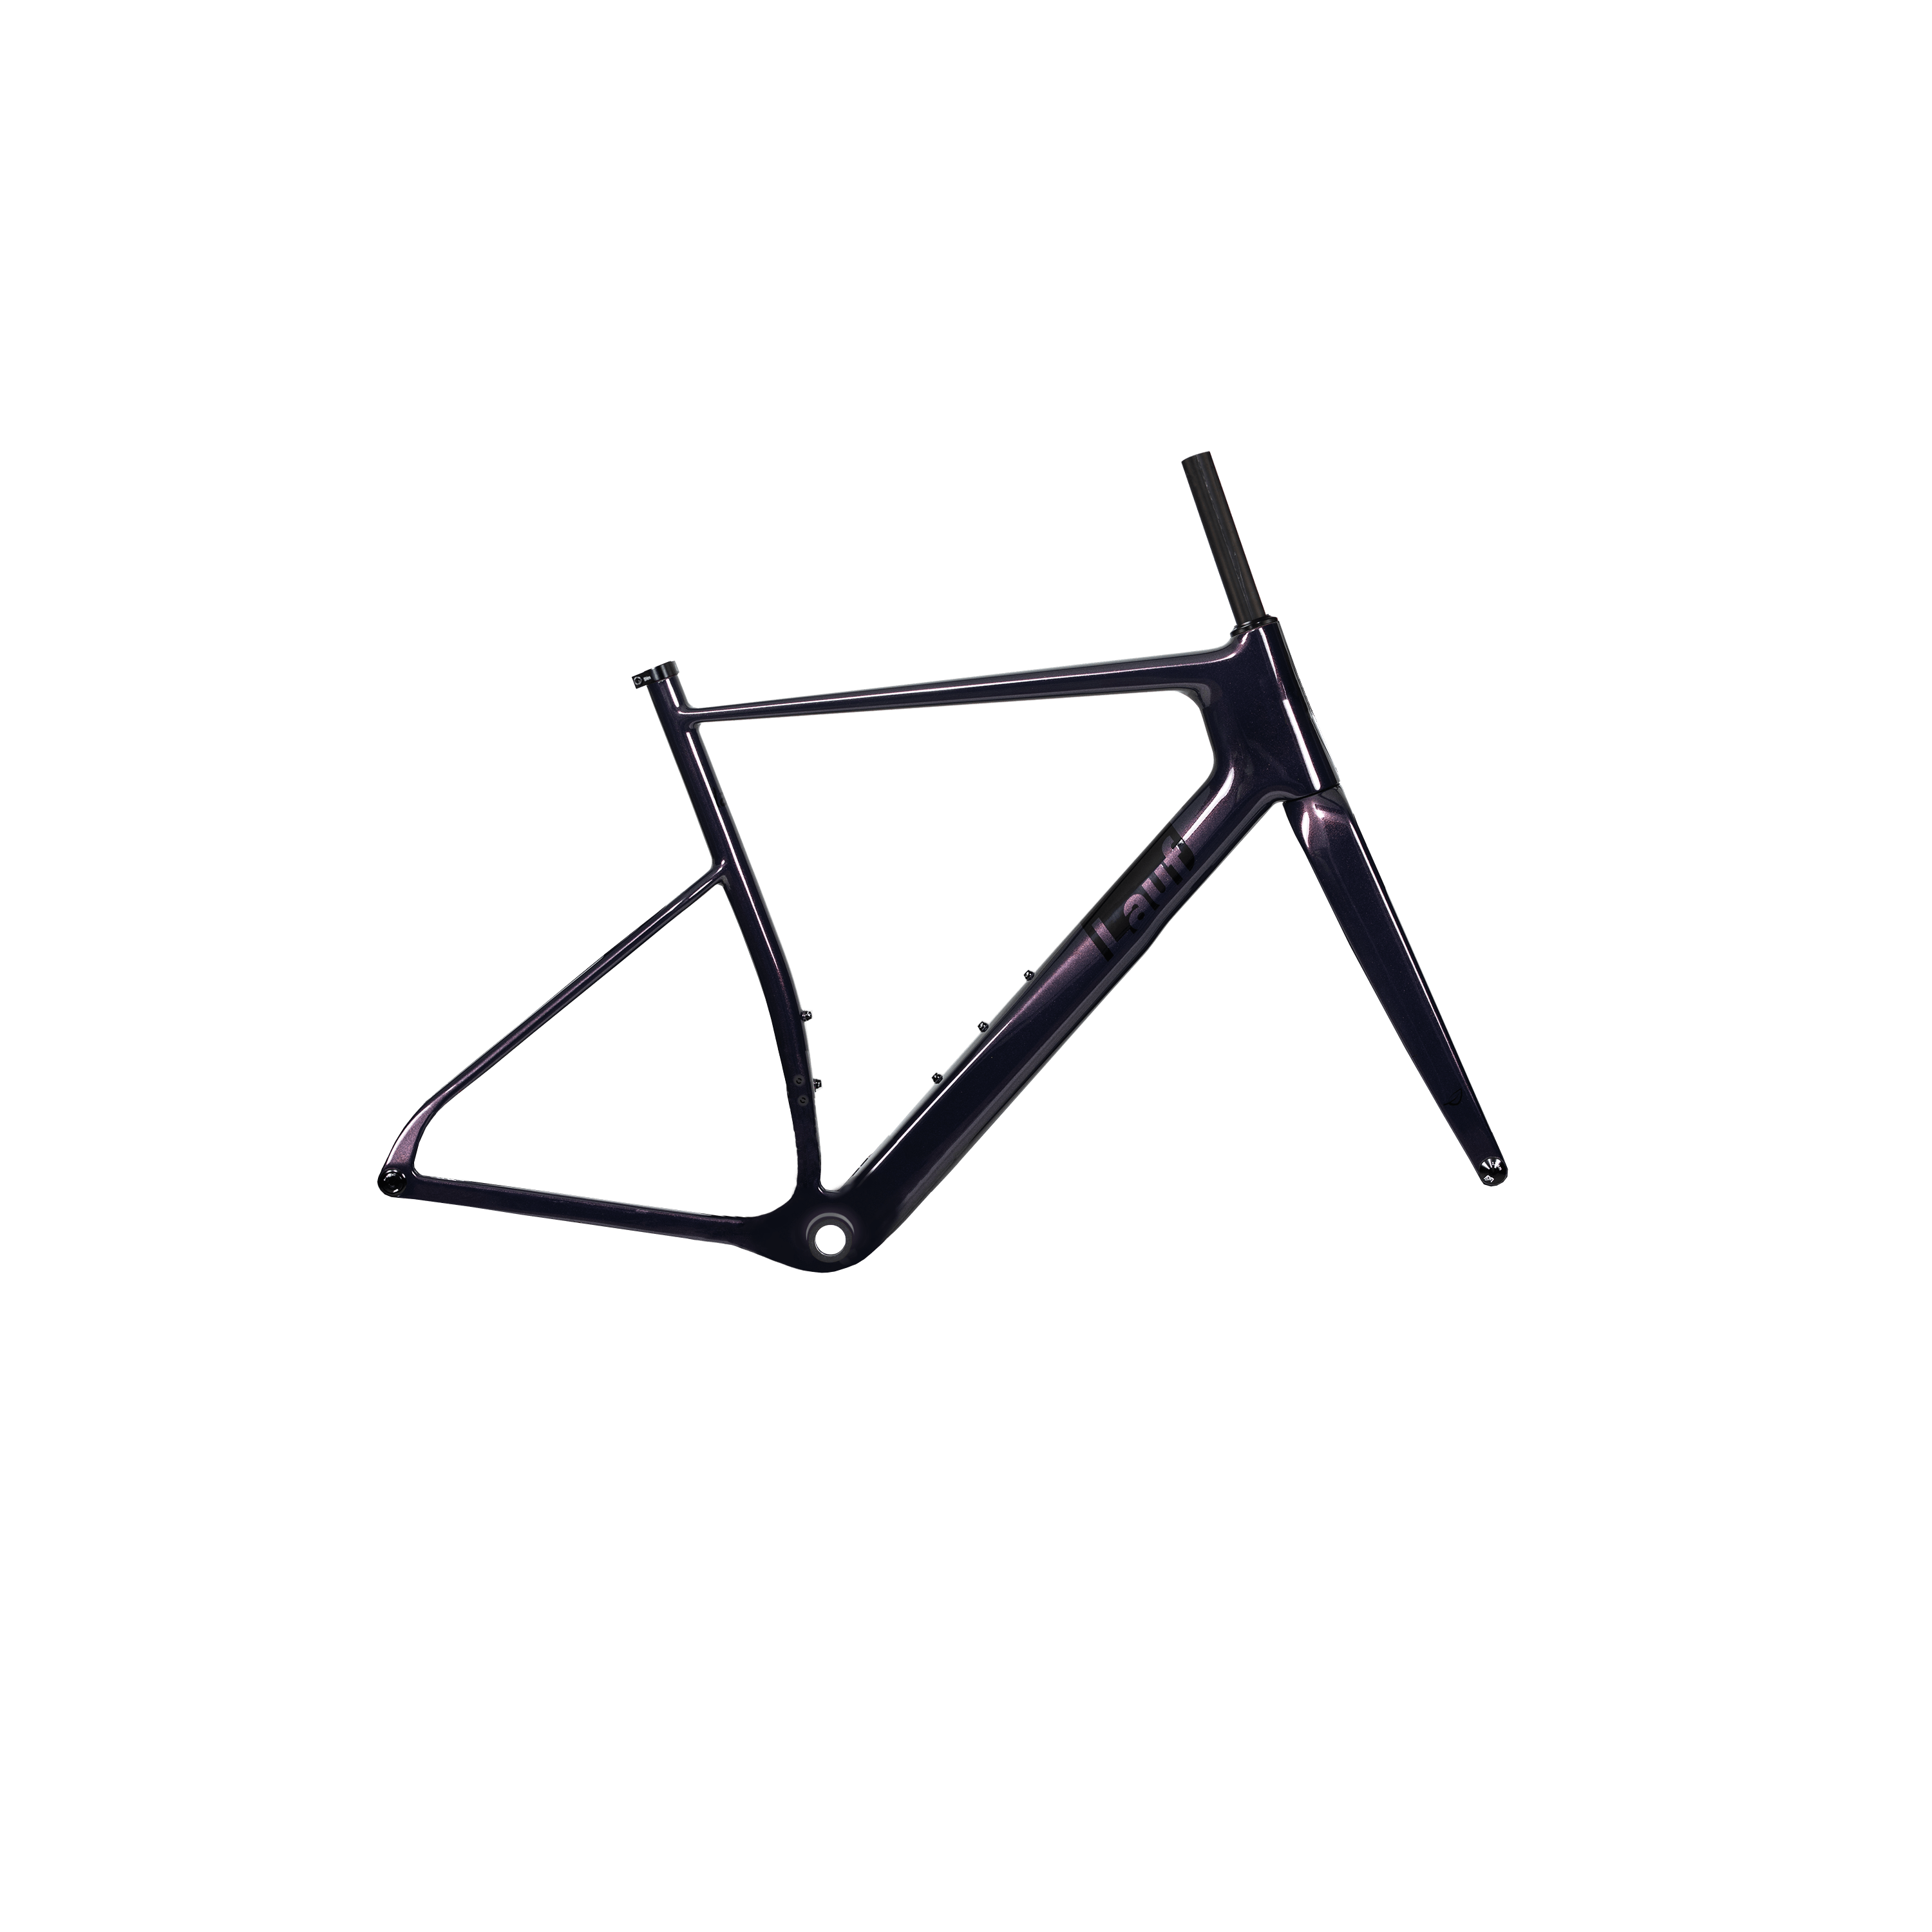 Úthald - Lauf Cycles - gravel bikes, road bikes and lightweight 